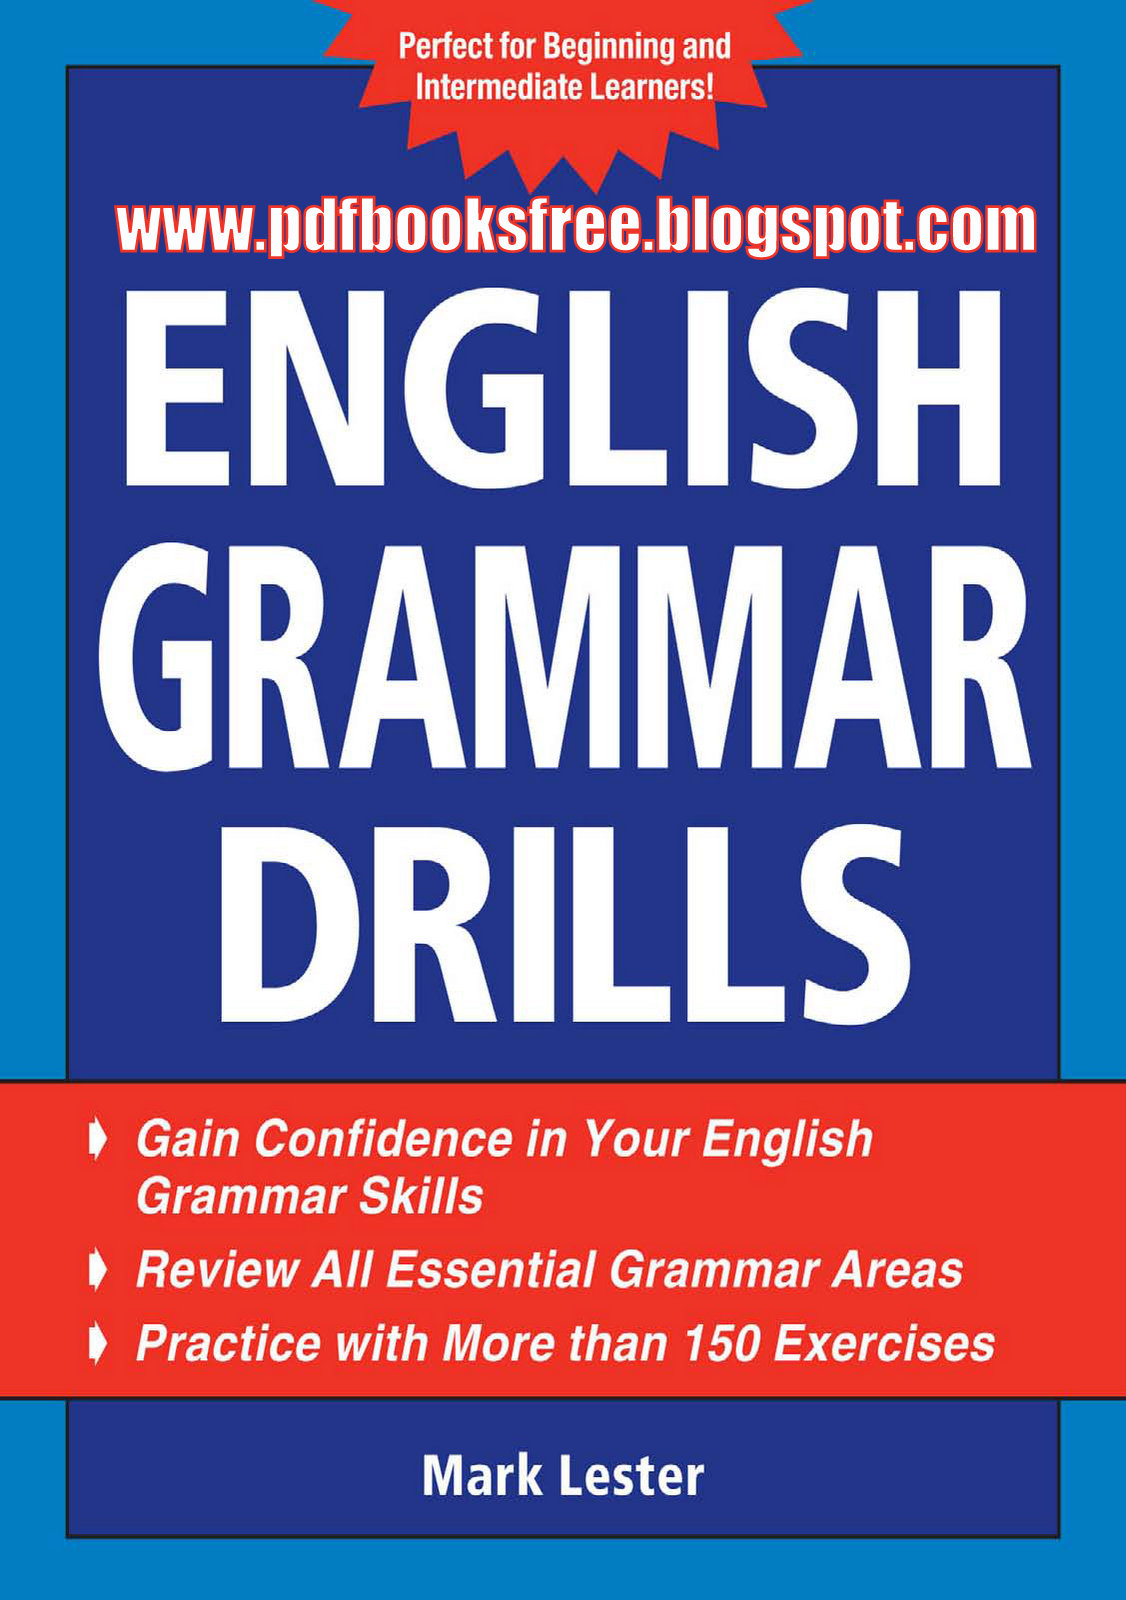 English Grammar Drills By Mark Lester PDF Free Download - Free Pdf Books